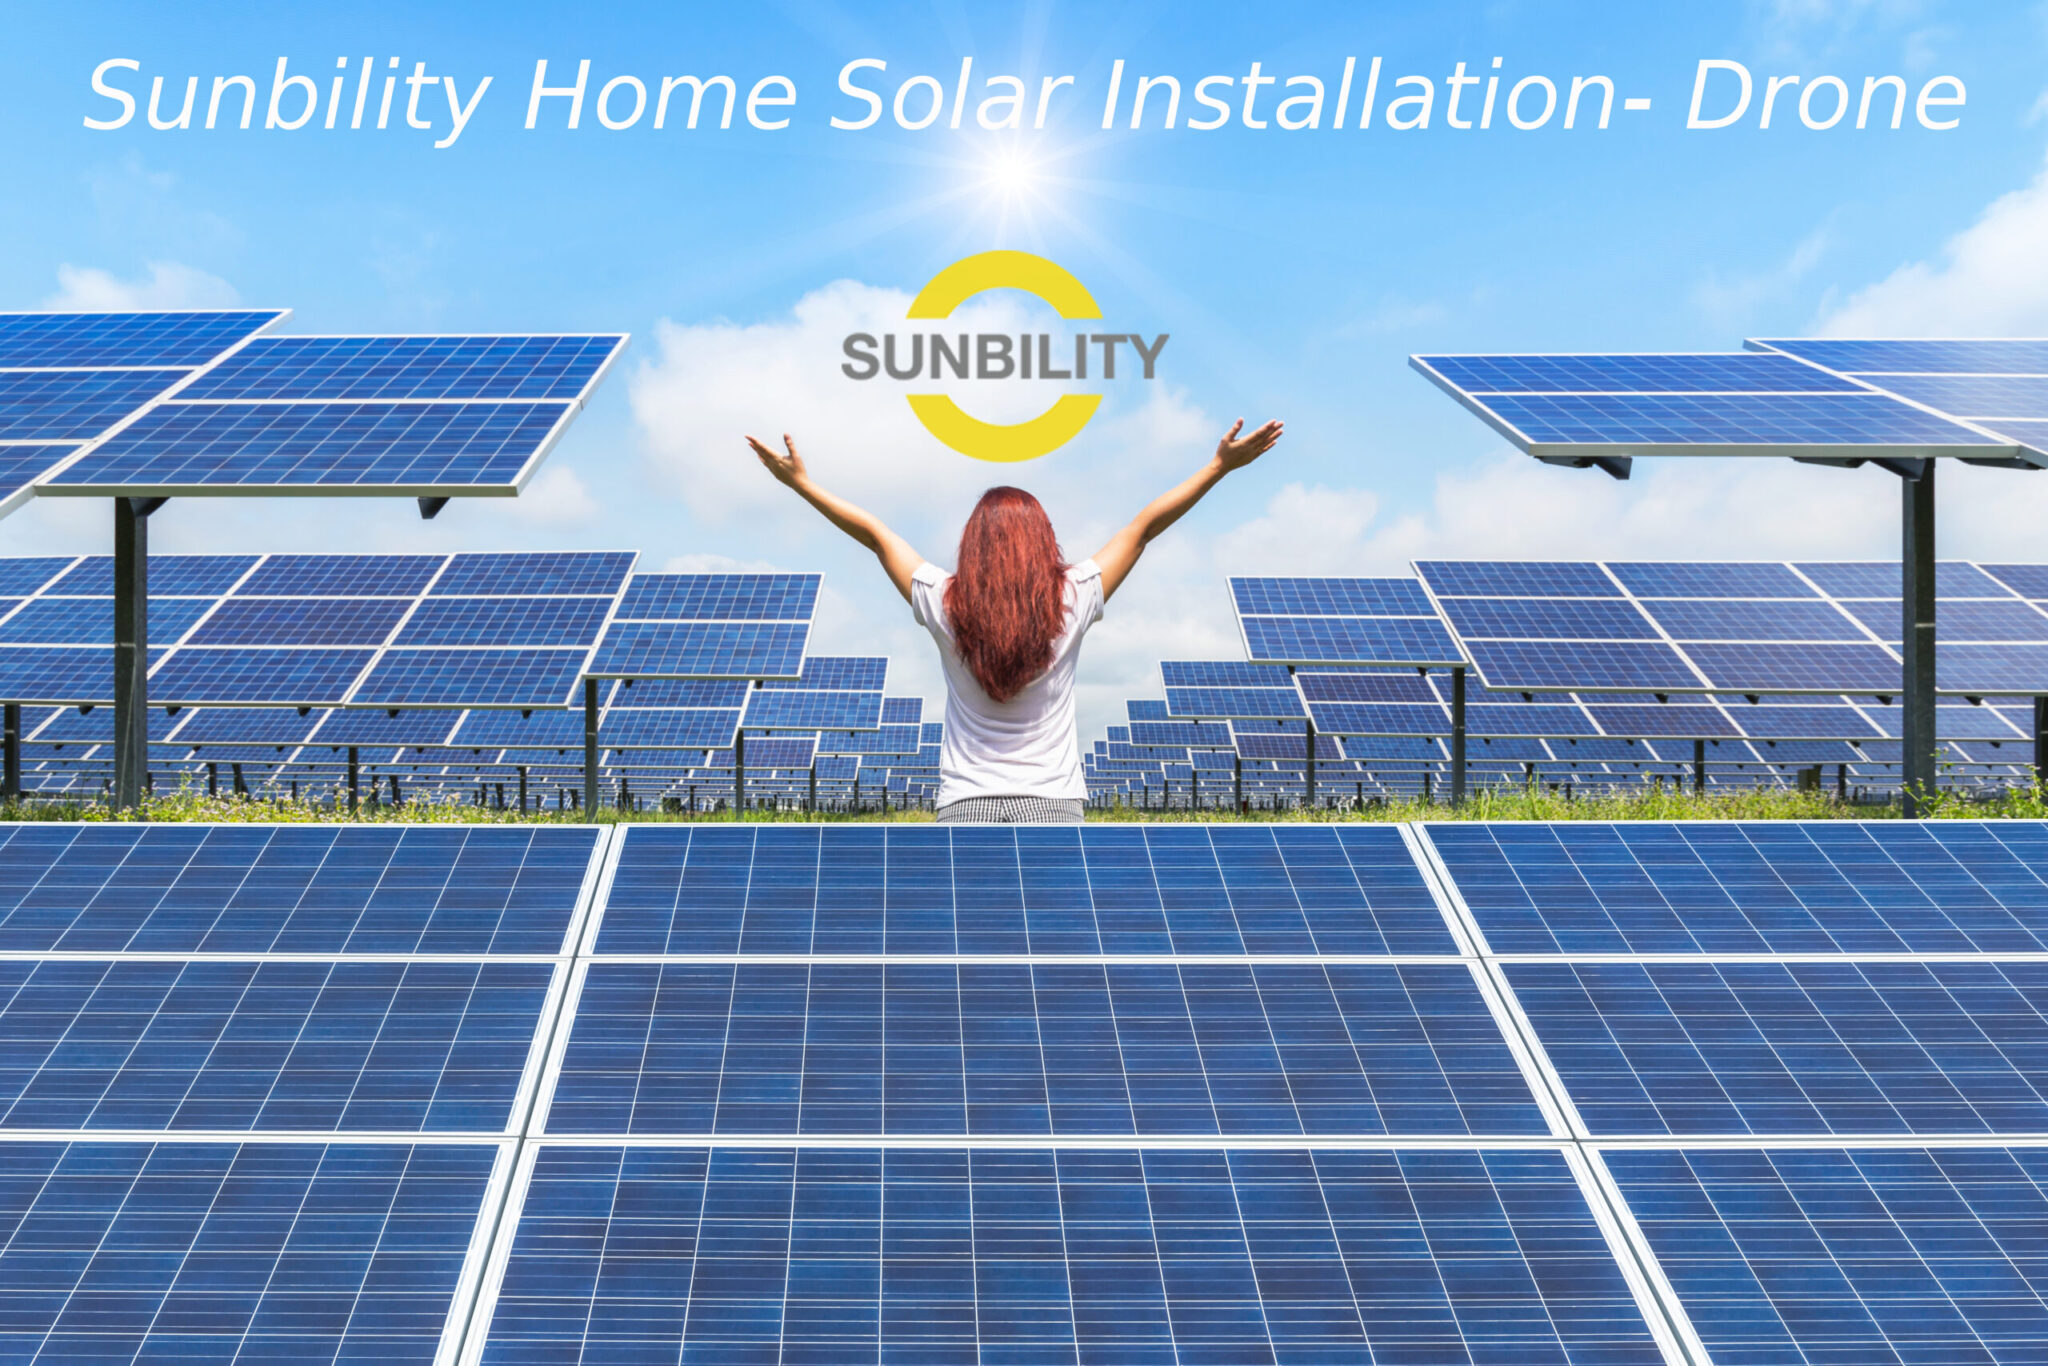 solar home installation drone footage